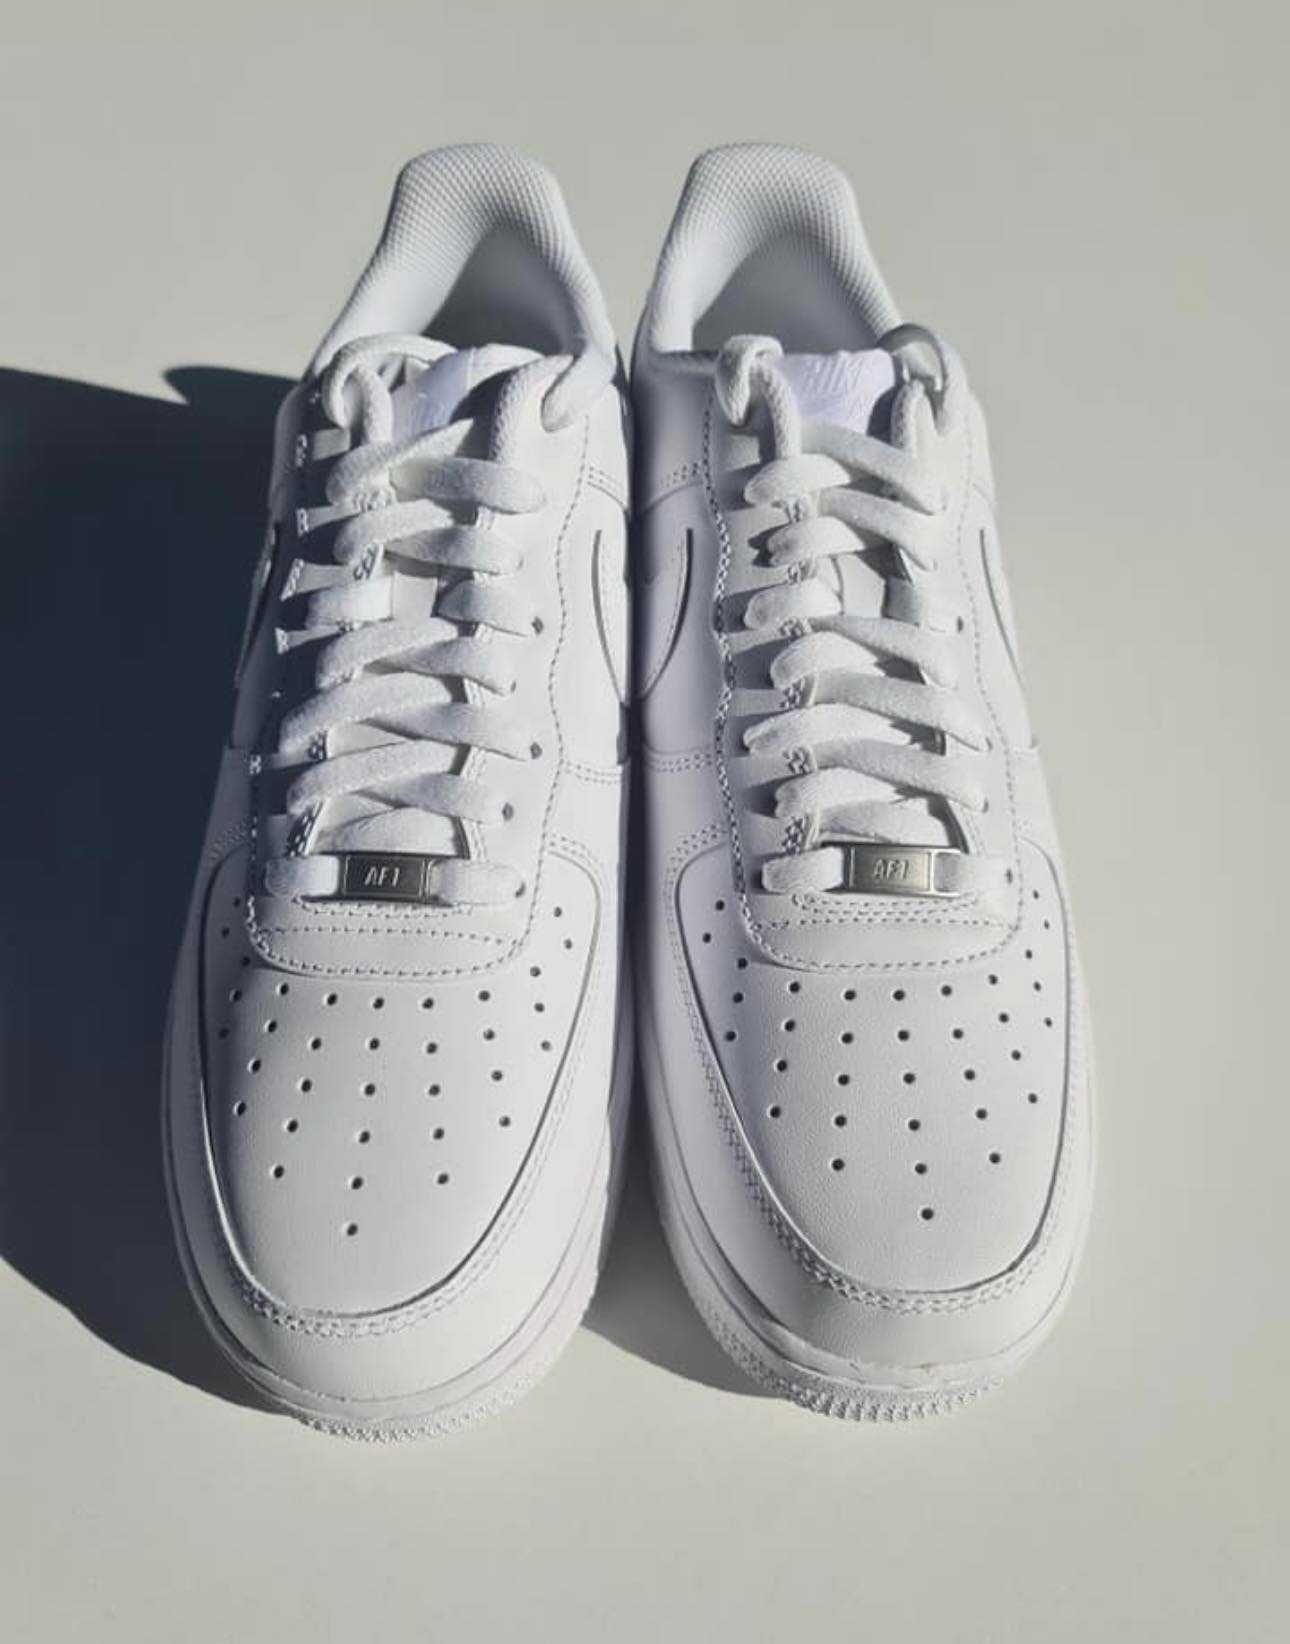 Adidasi/Tenesi/Sneakersi Nike Air Force 1 Unisex